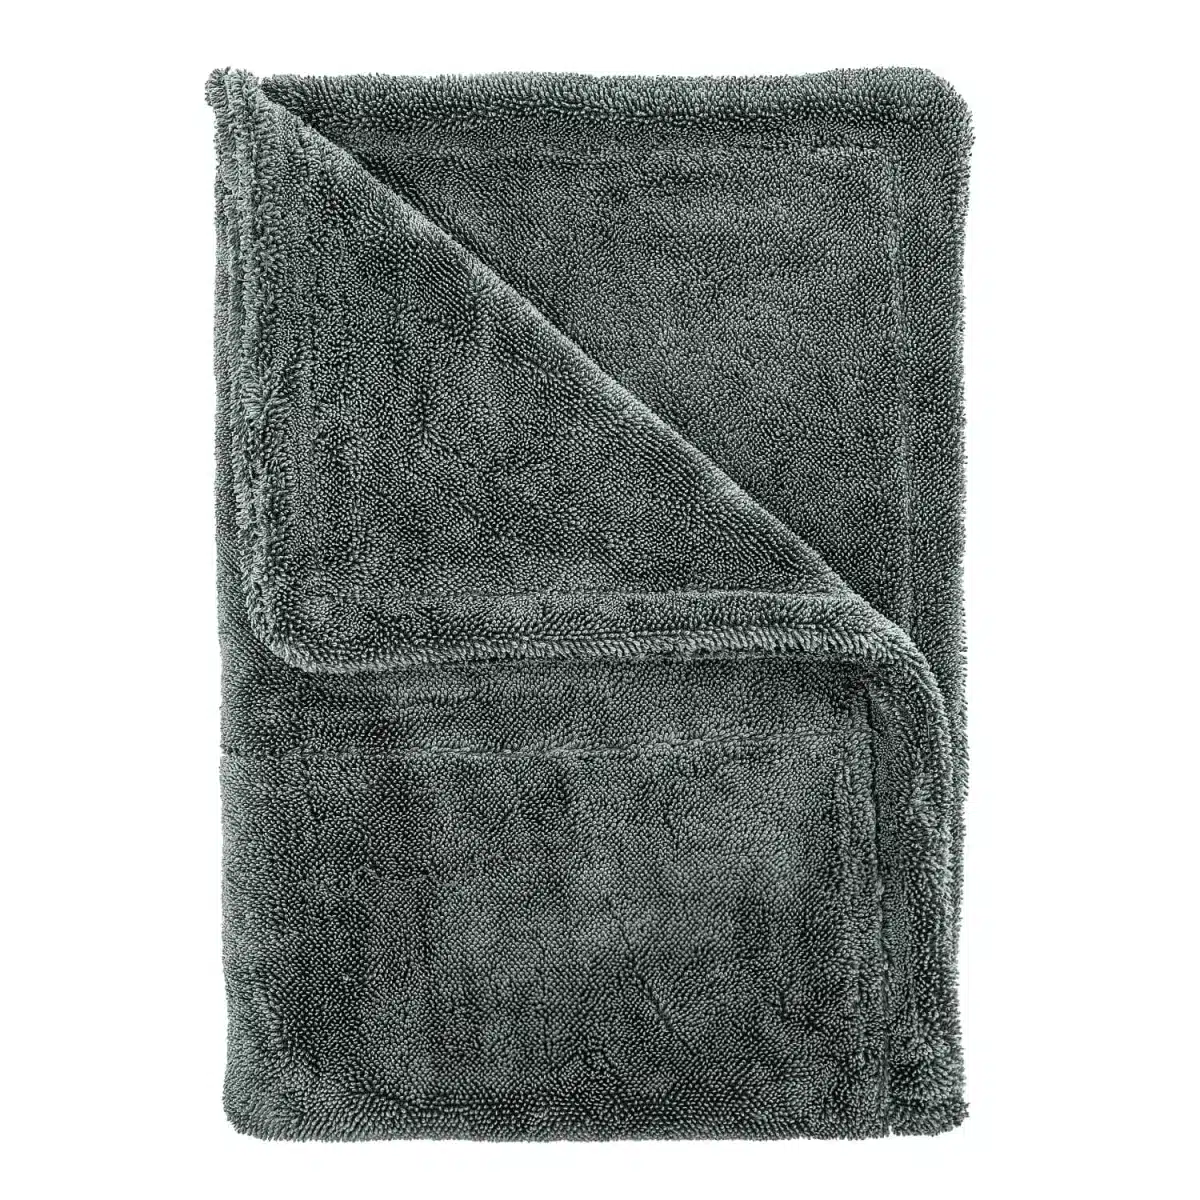 Chemicalworkz Grey Shark Twisted Towel Premium Trockentuch 1400GSM 40×60 Zentimeter